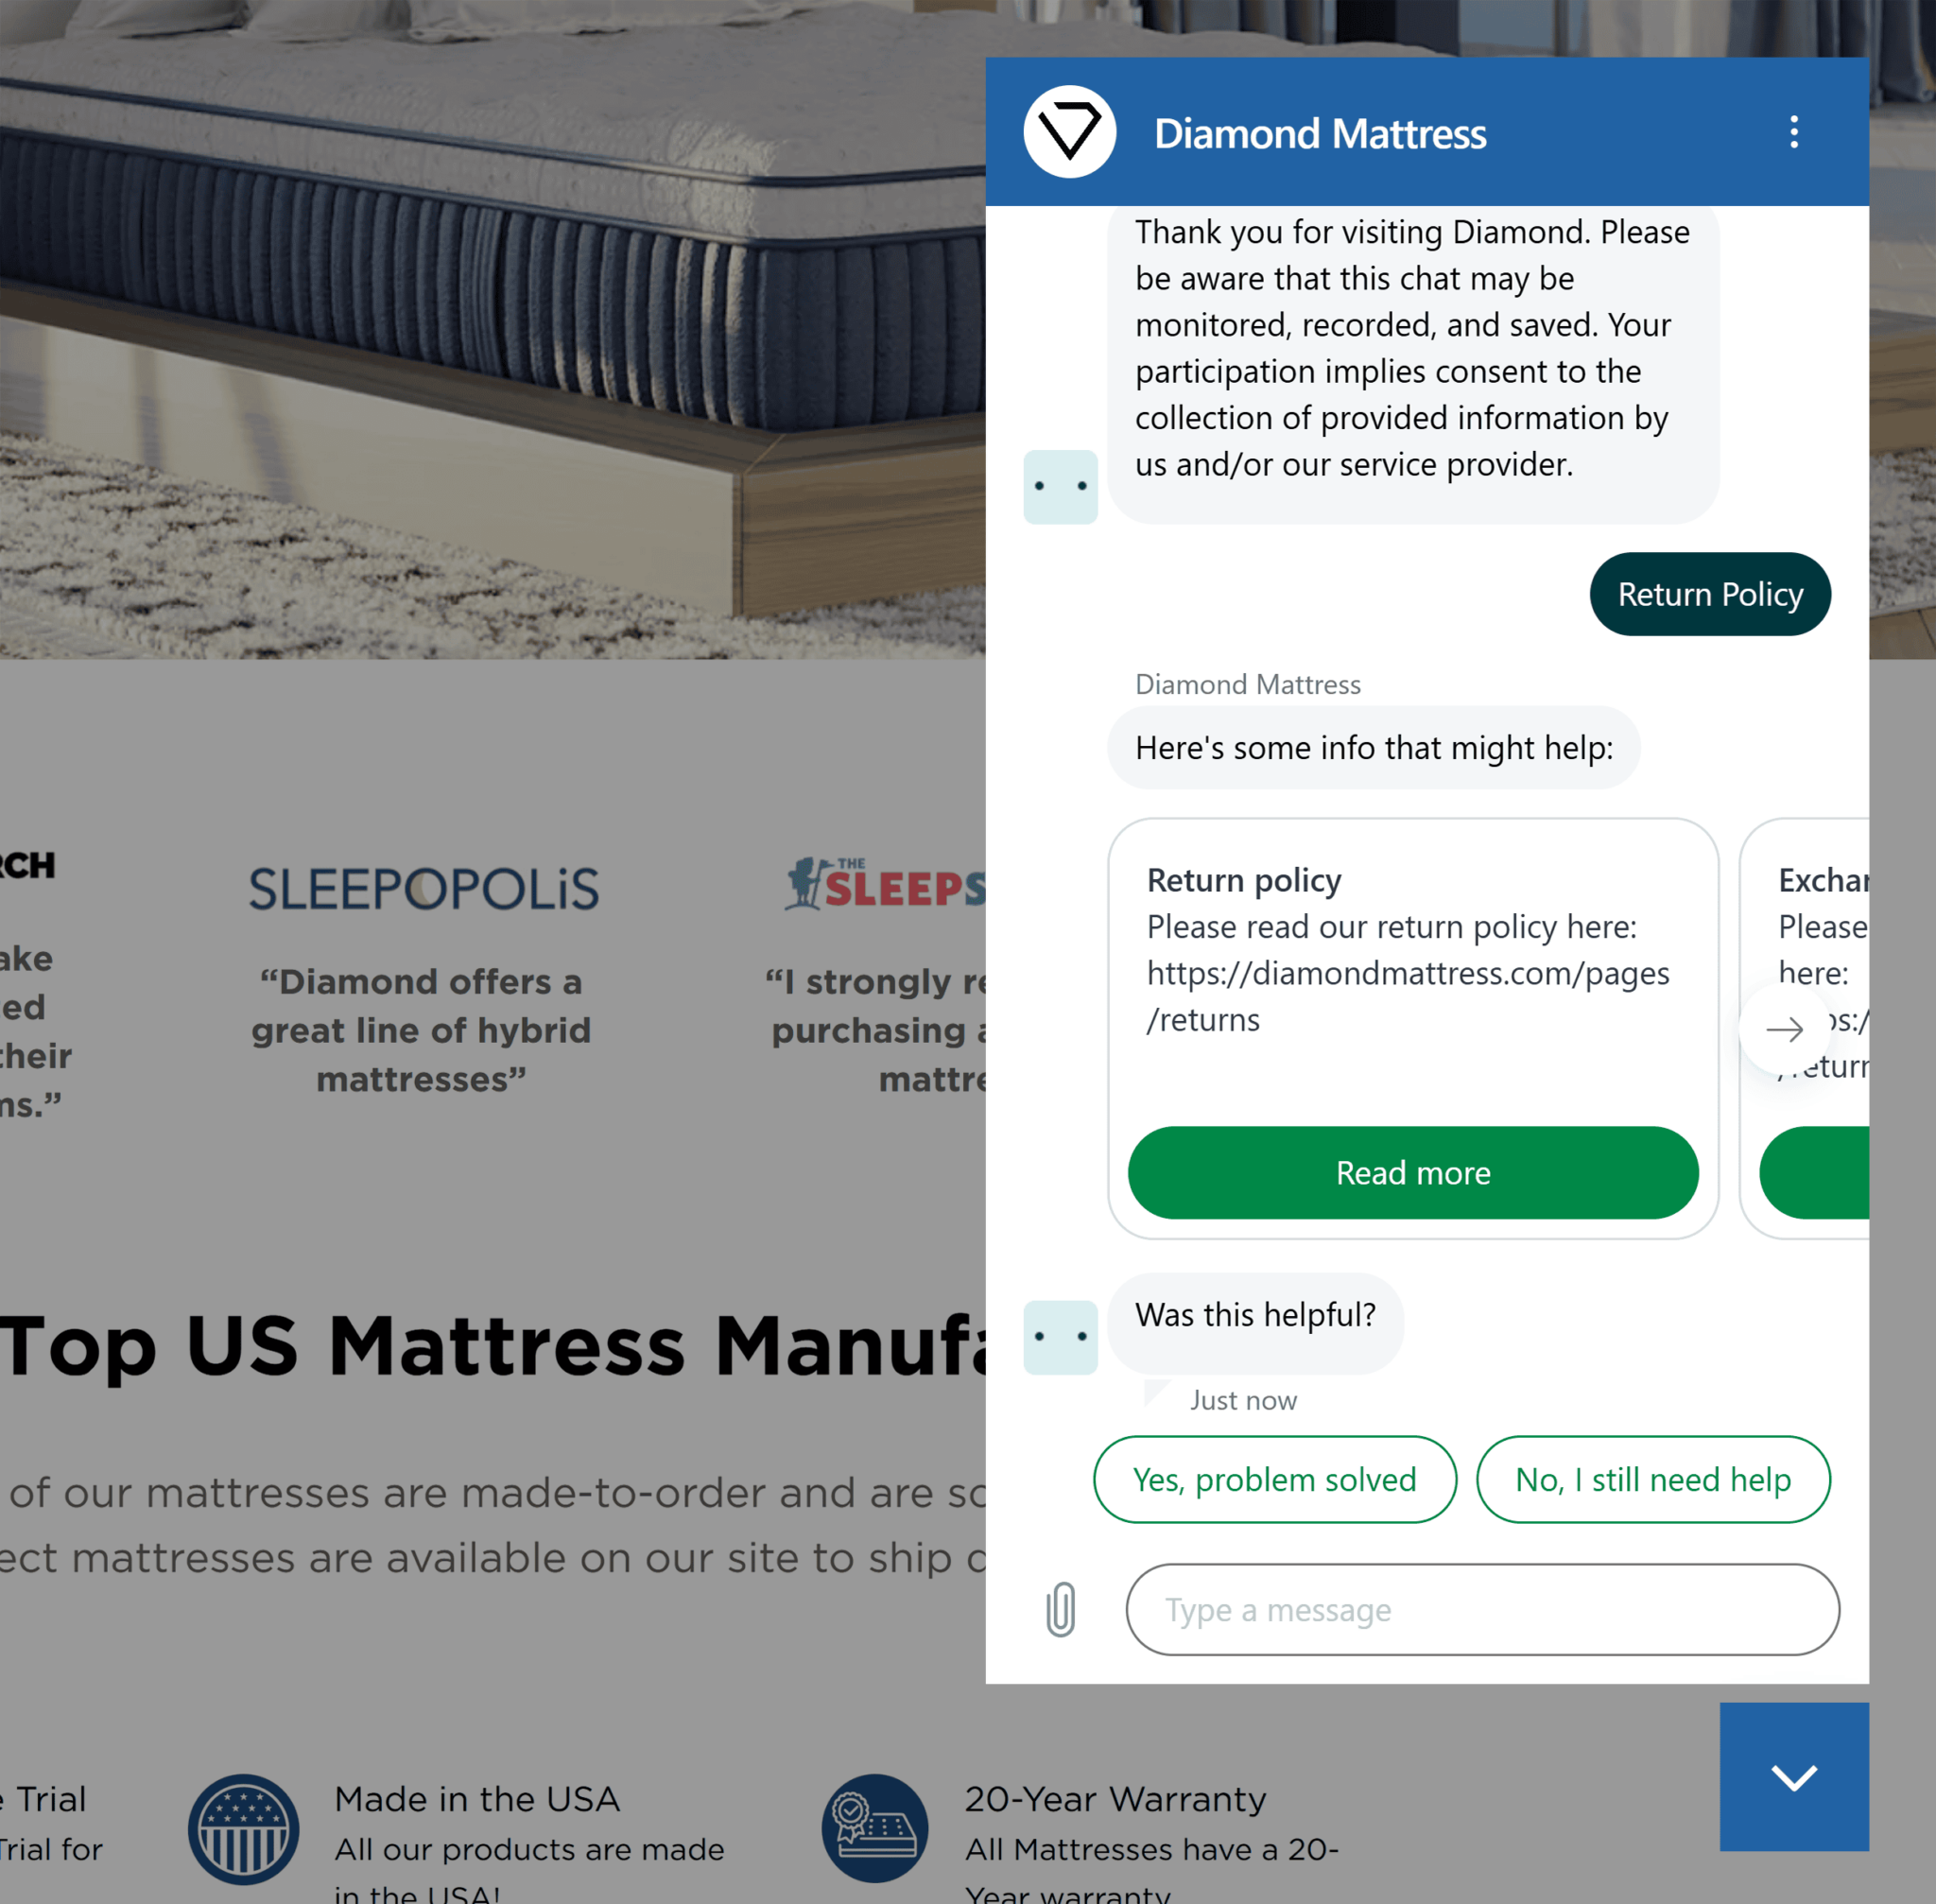 diamond-mattress-chatbot Ecommerce Marketing: 11 Strategies to Drive Traffic and Sales